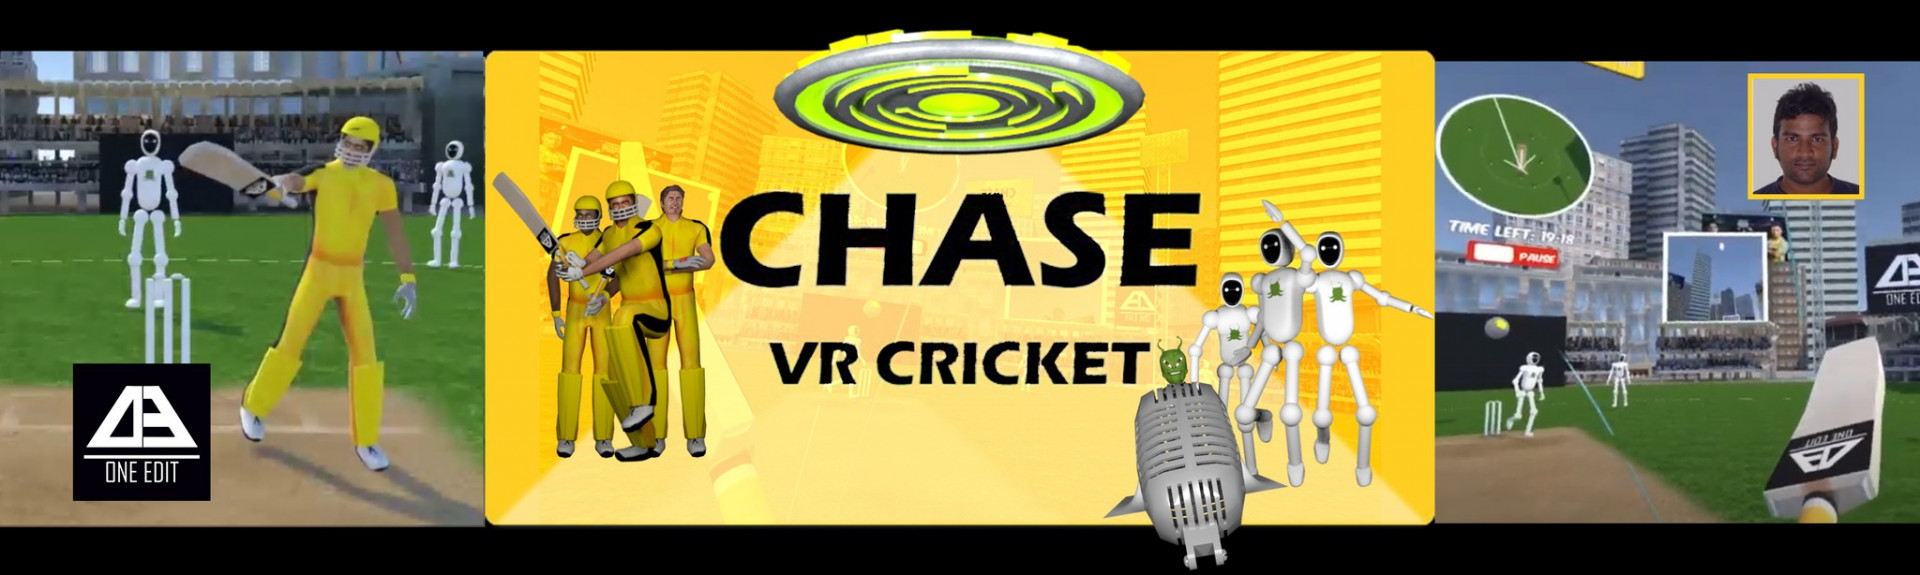 Chase VR Cricket